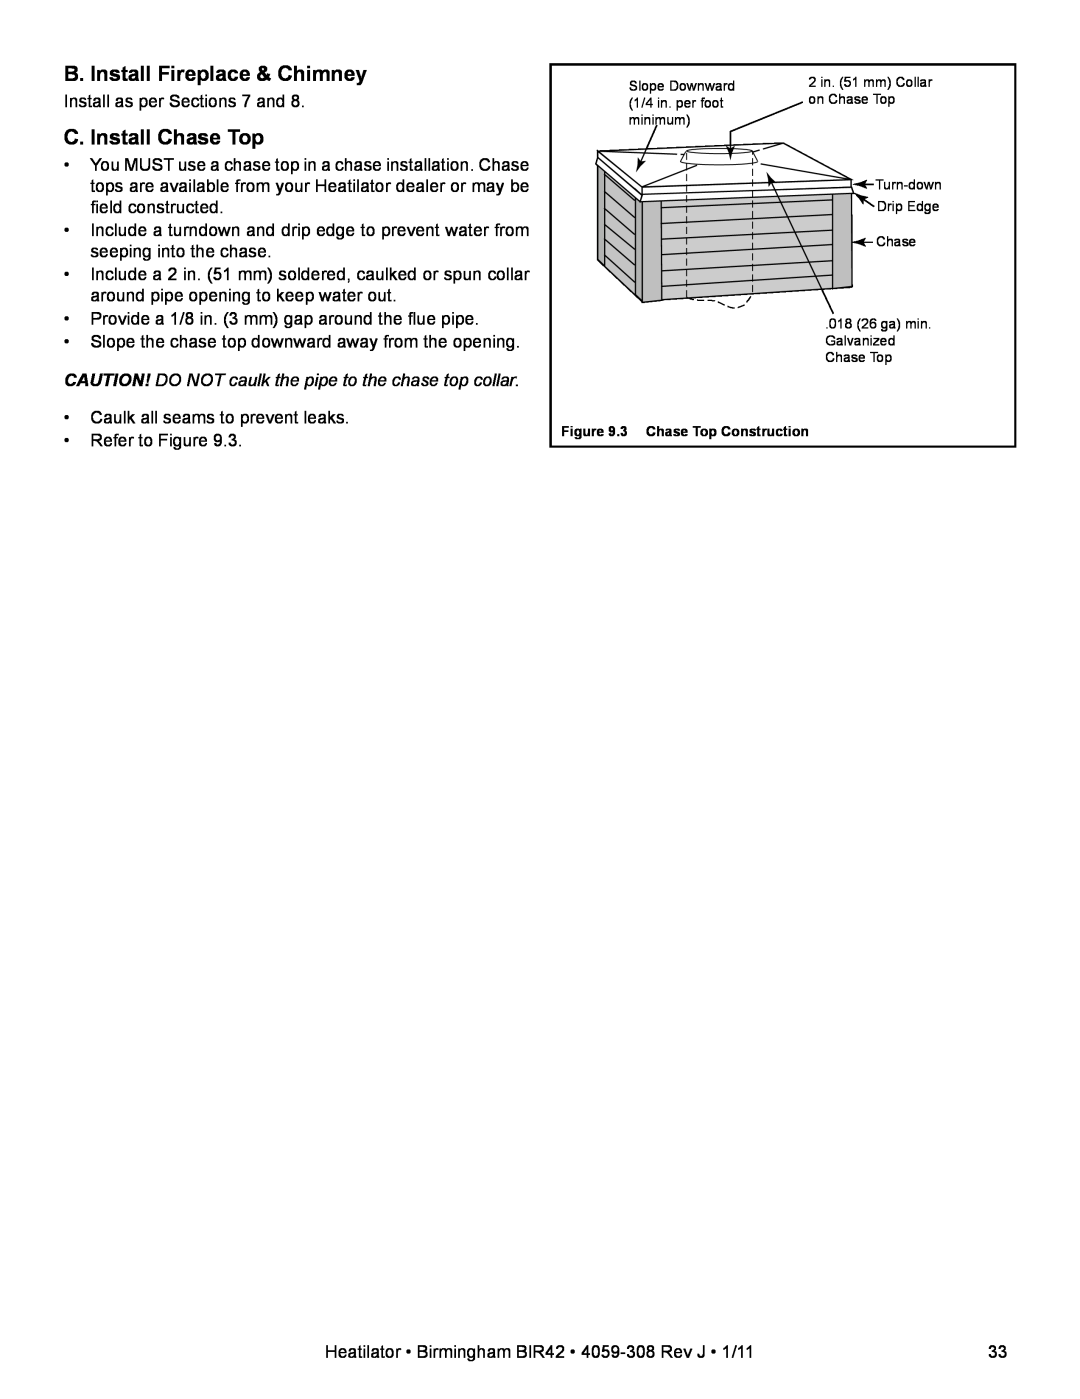 Heatiator BIR42 owner manual B. Install Fireplace & Chimney, C. Install Chase Top 